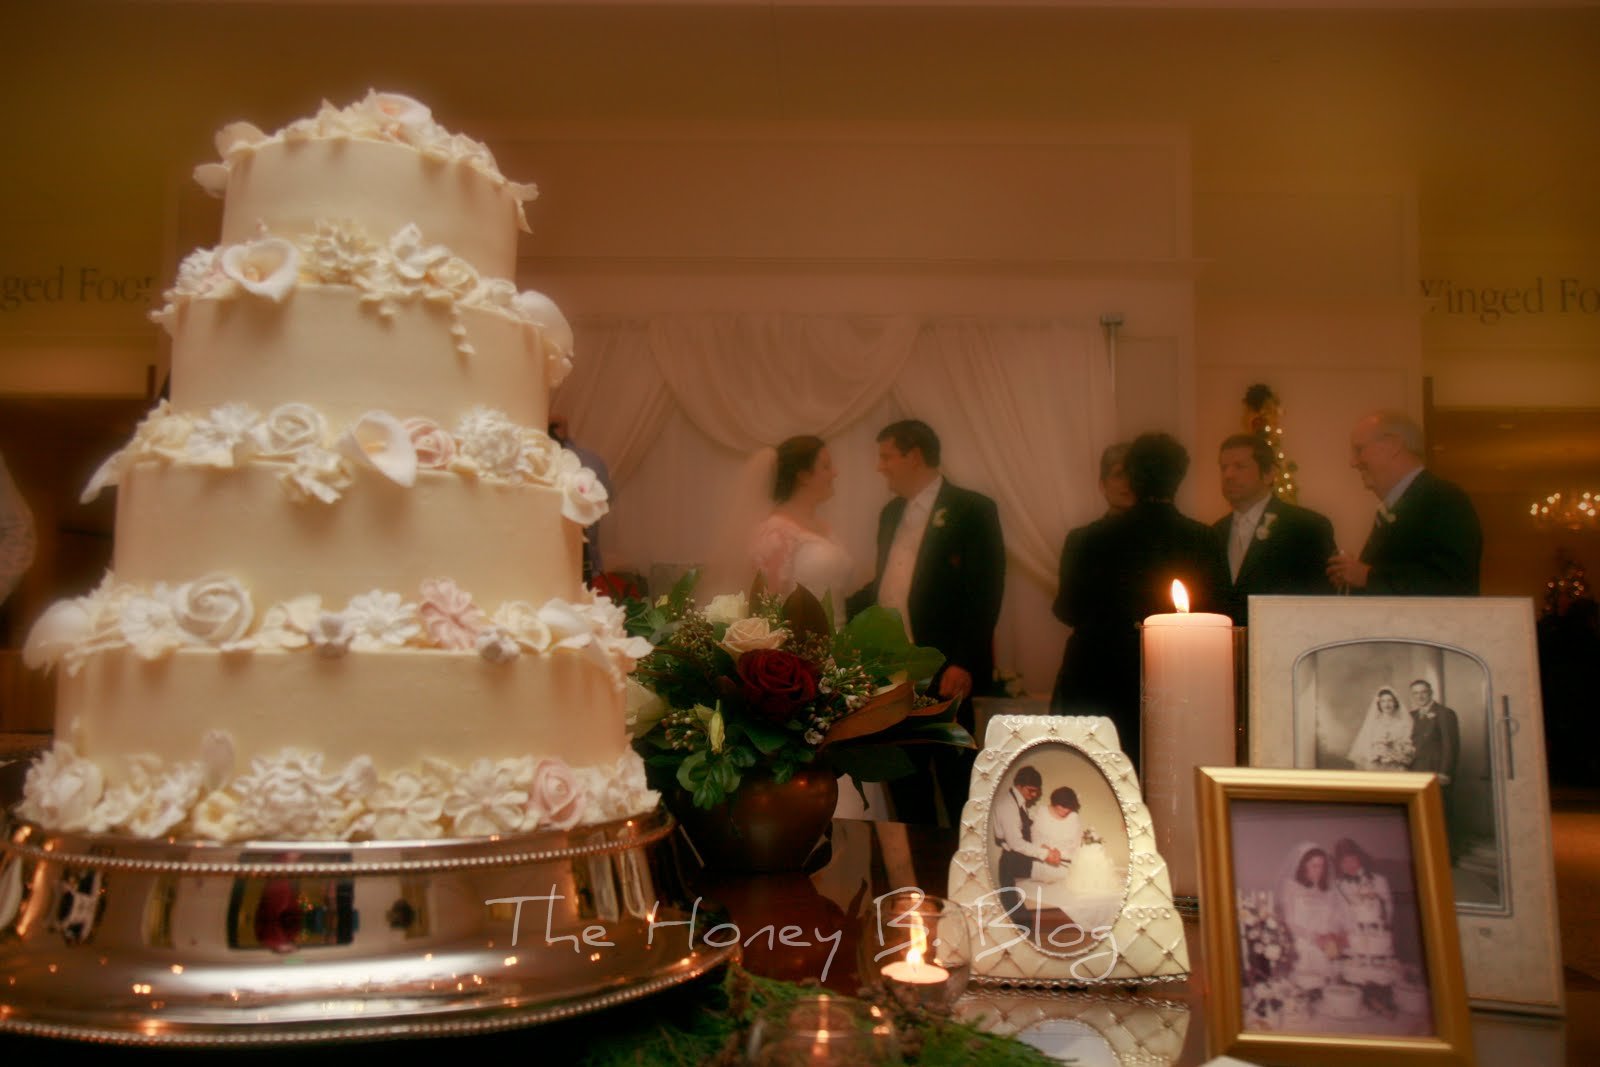 cake at their weddings.